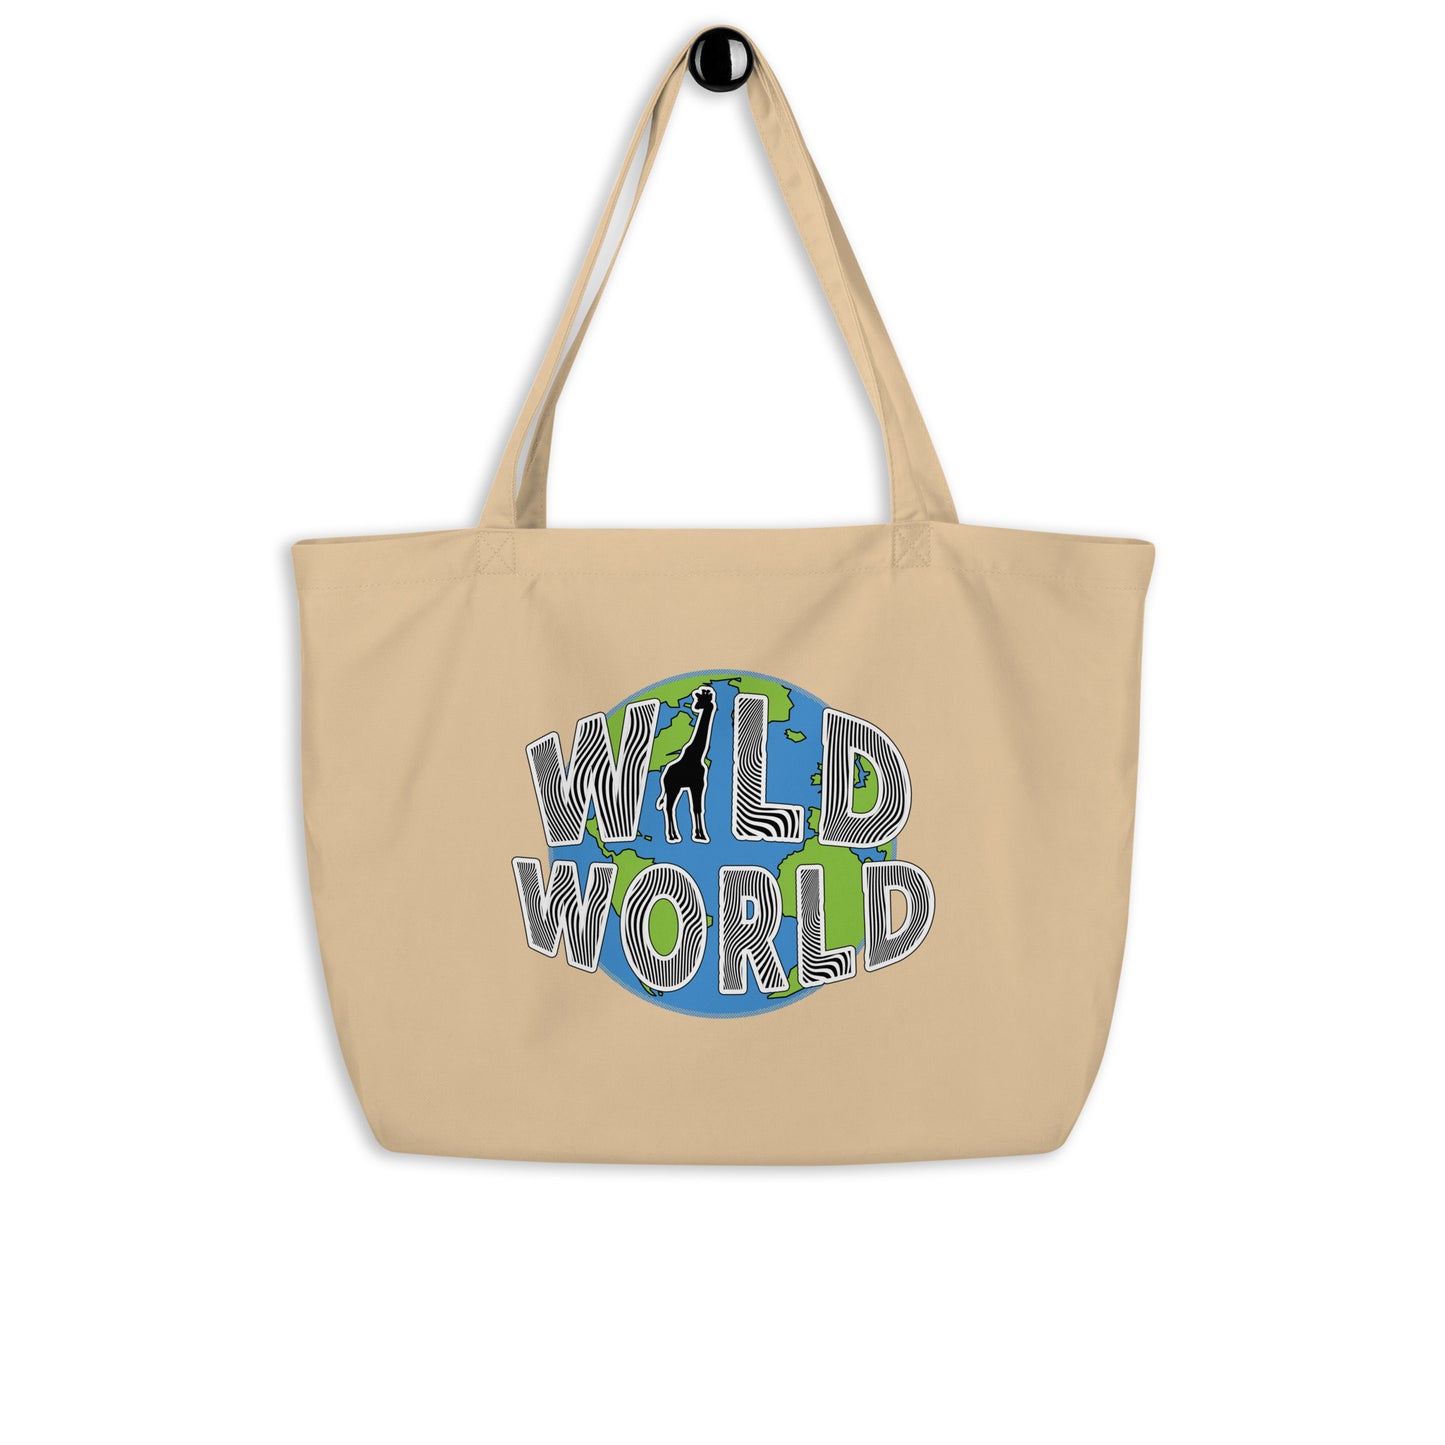 Tote bag (Large Organic) - Wild World w Scott Solomon